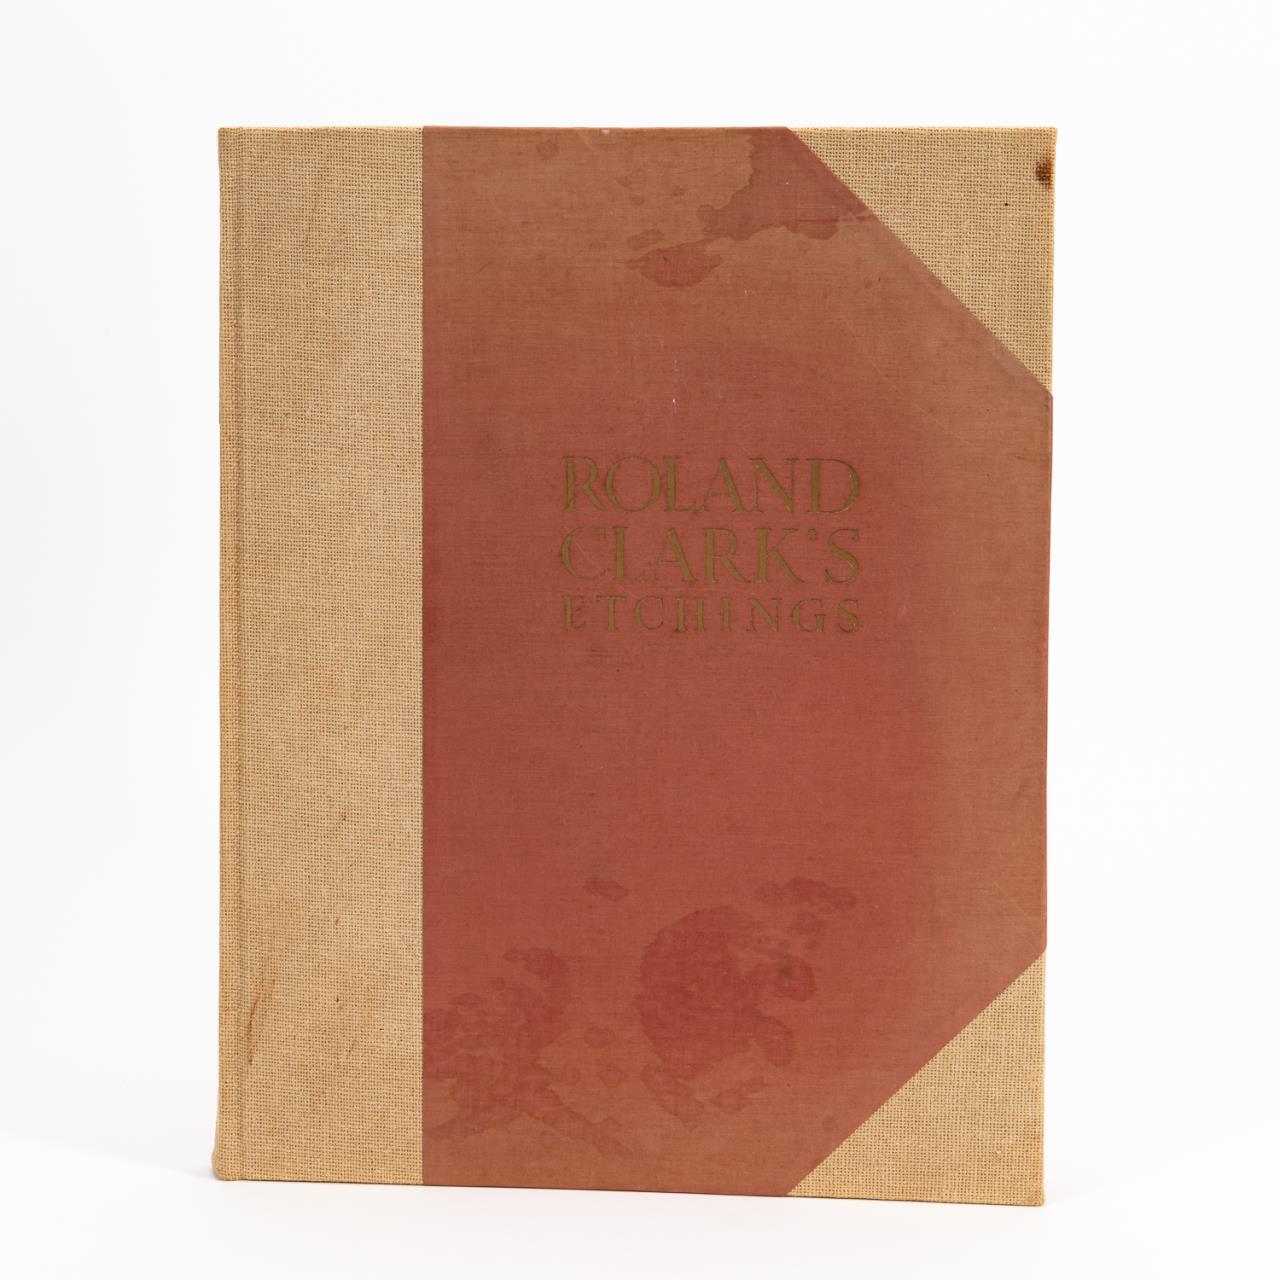 "ROLAND CLARK'S ETCHINGS" DERRYDALE